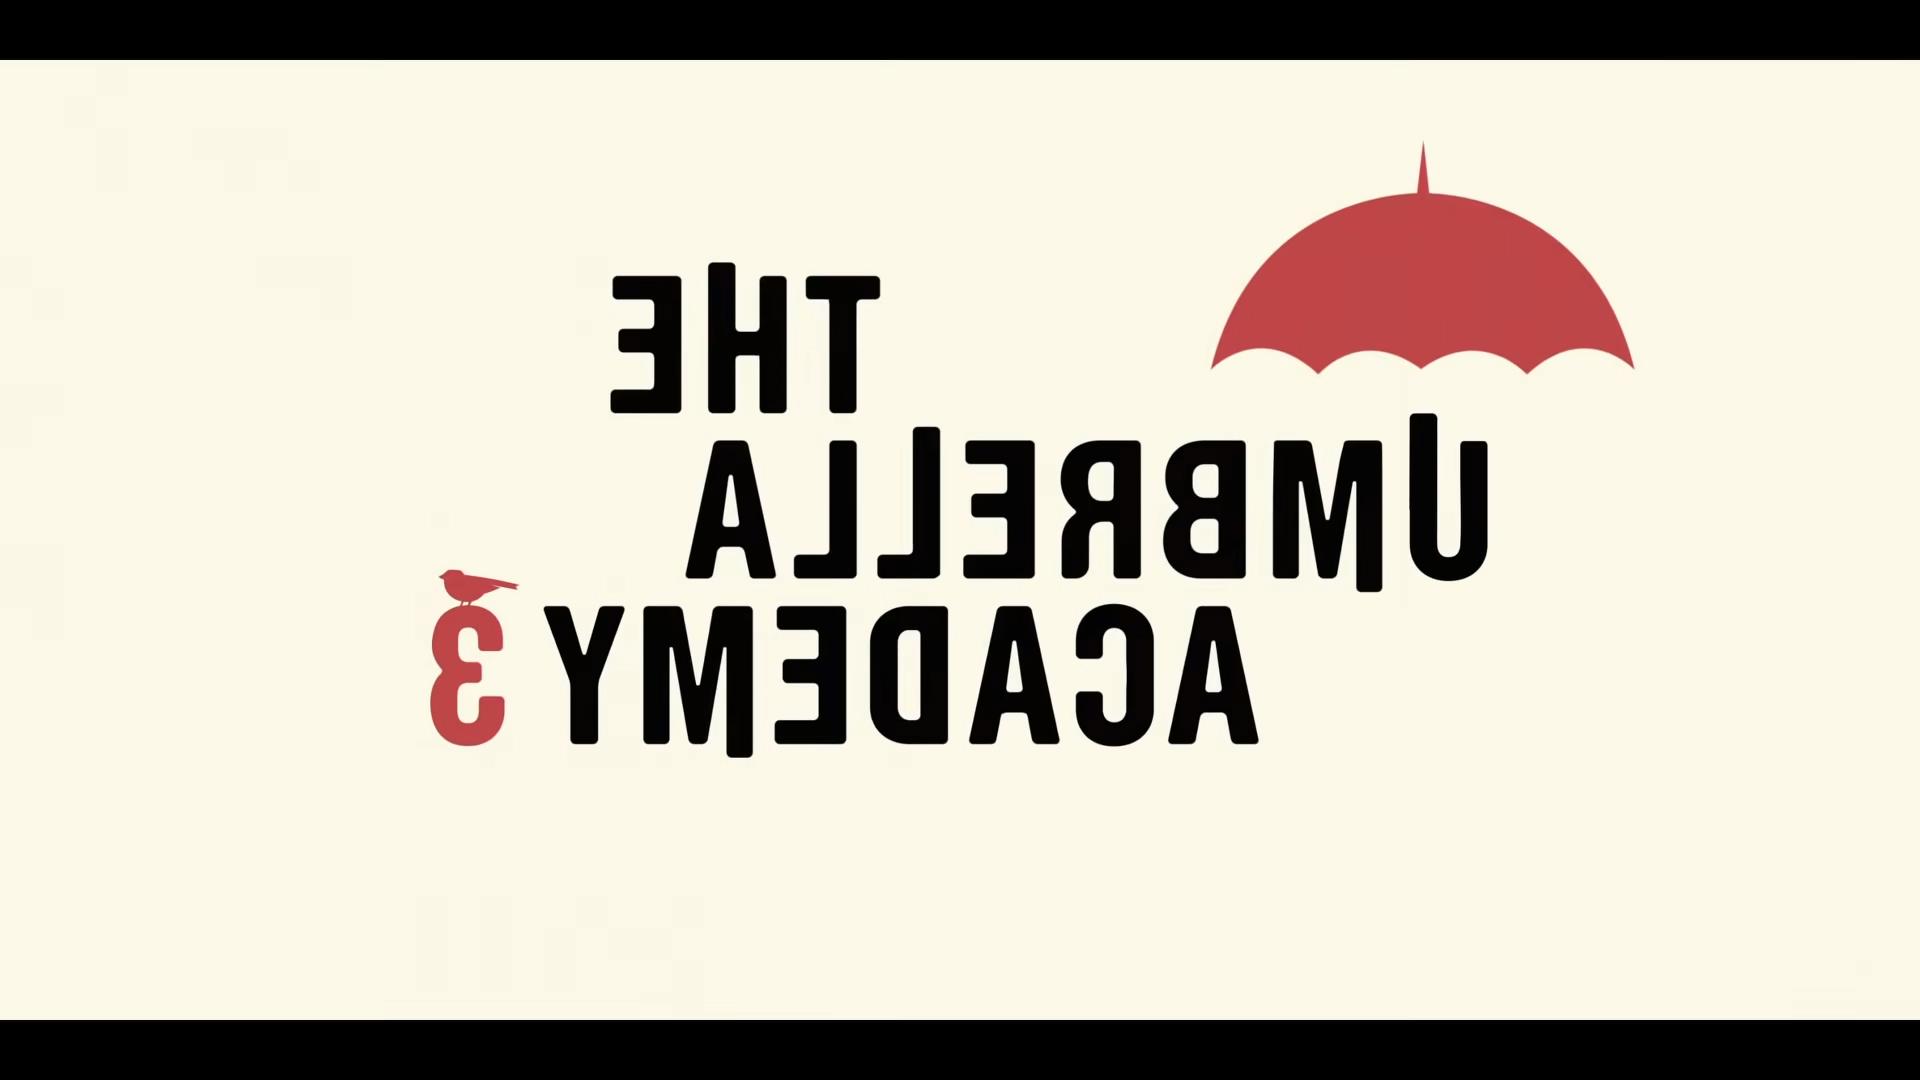 Umbrella Academy Season 3 Is Coming Soon Game News 24